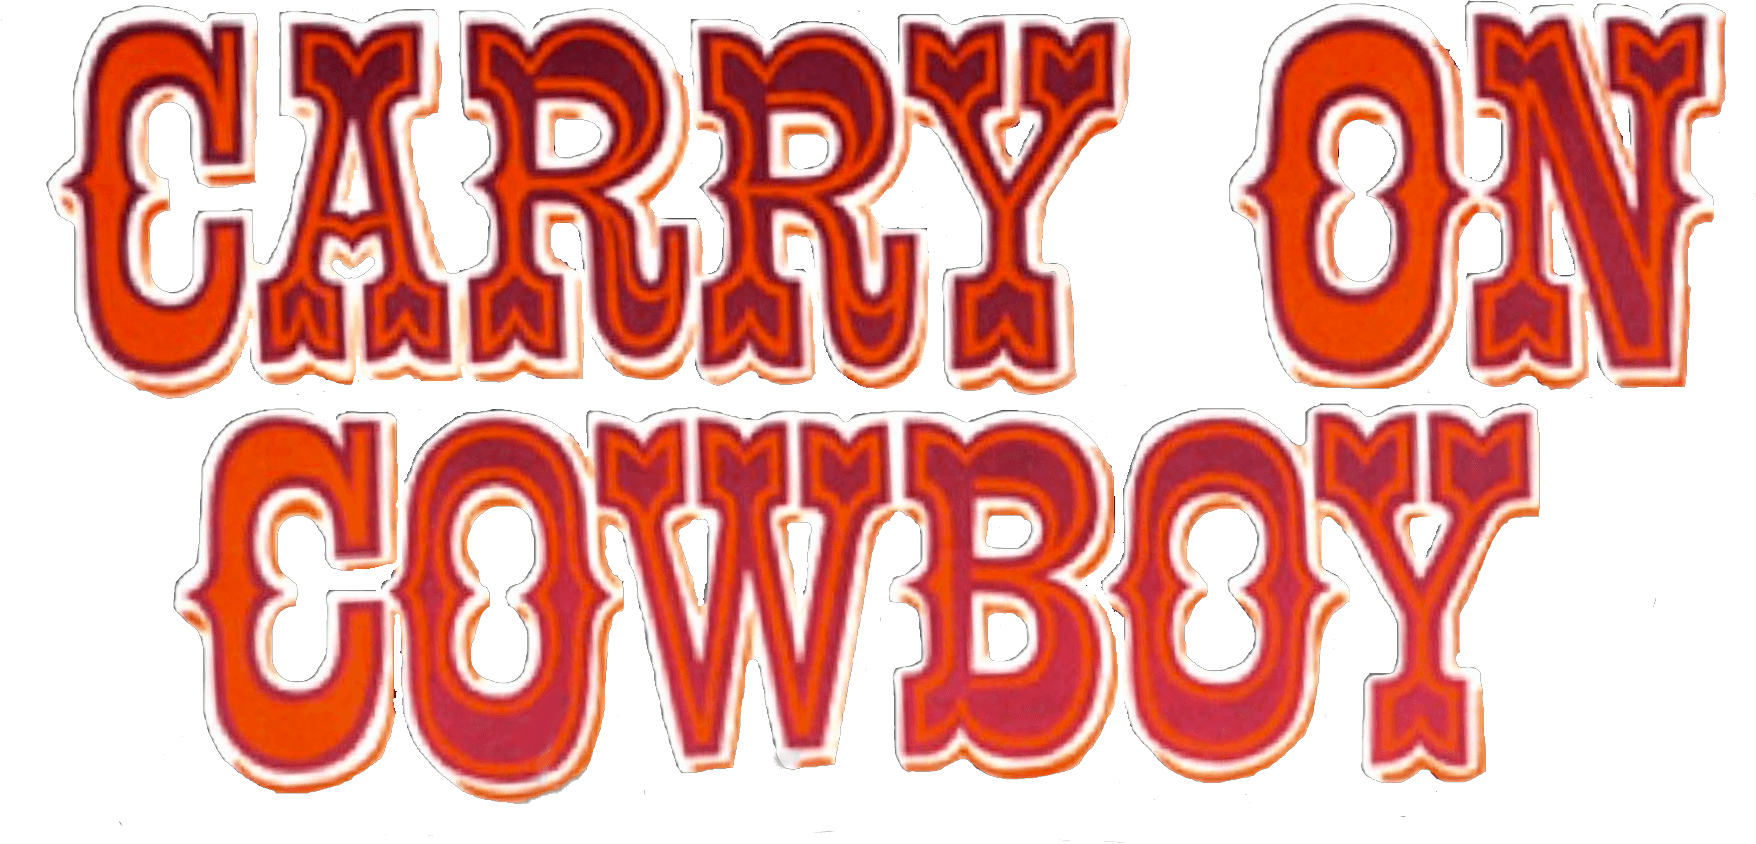 Carry On Cowboy logo